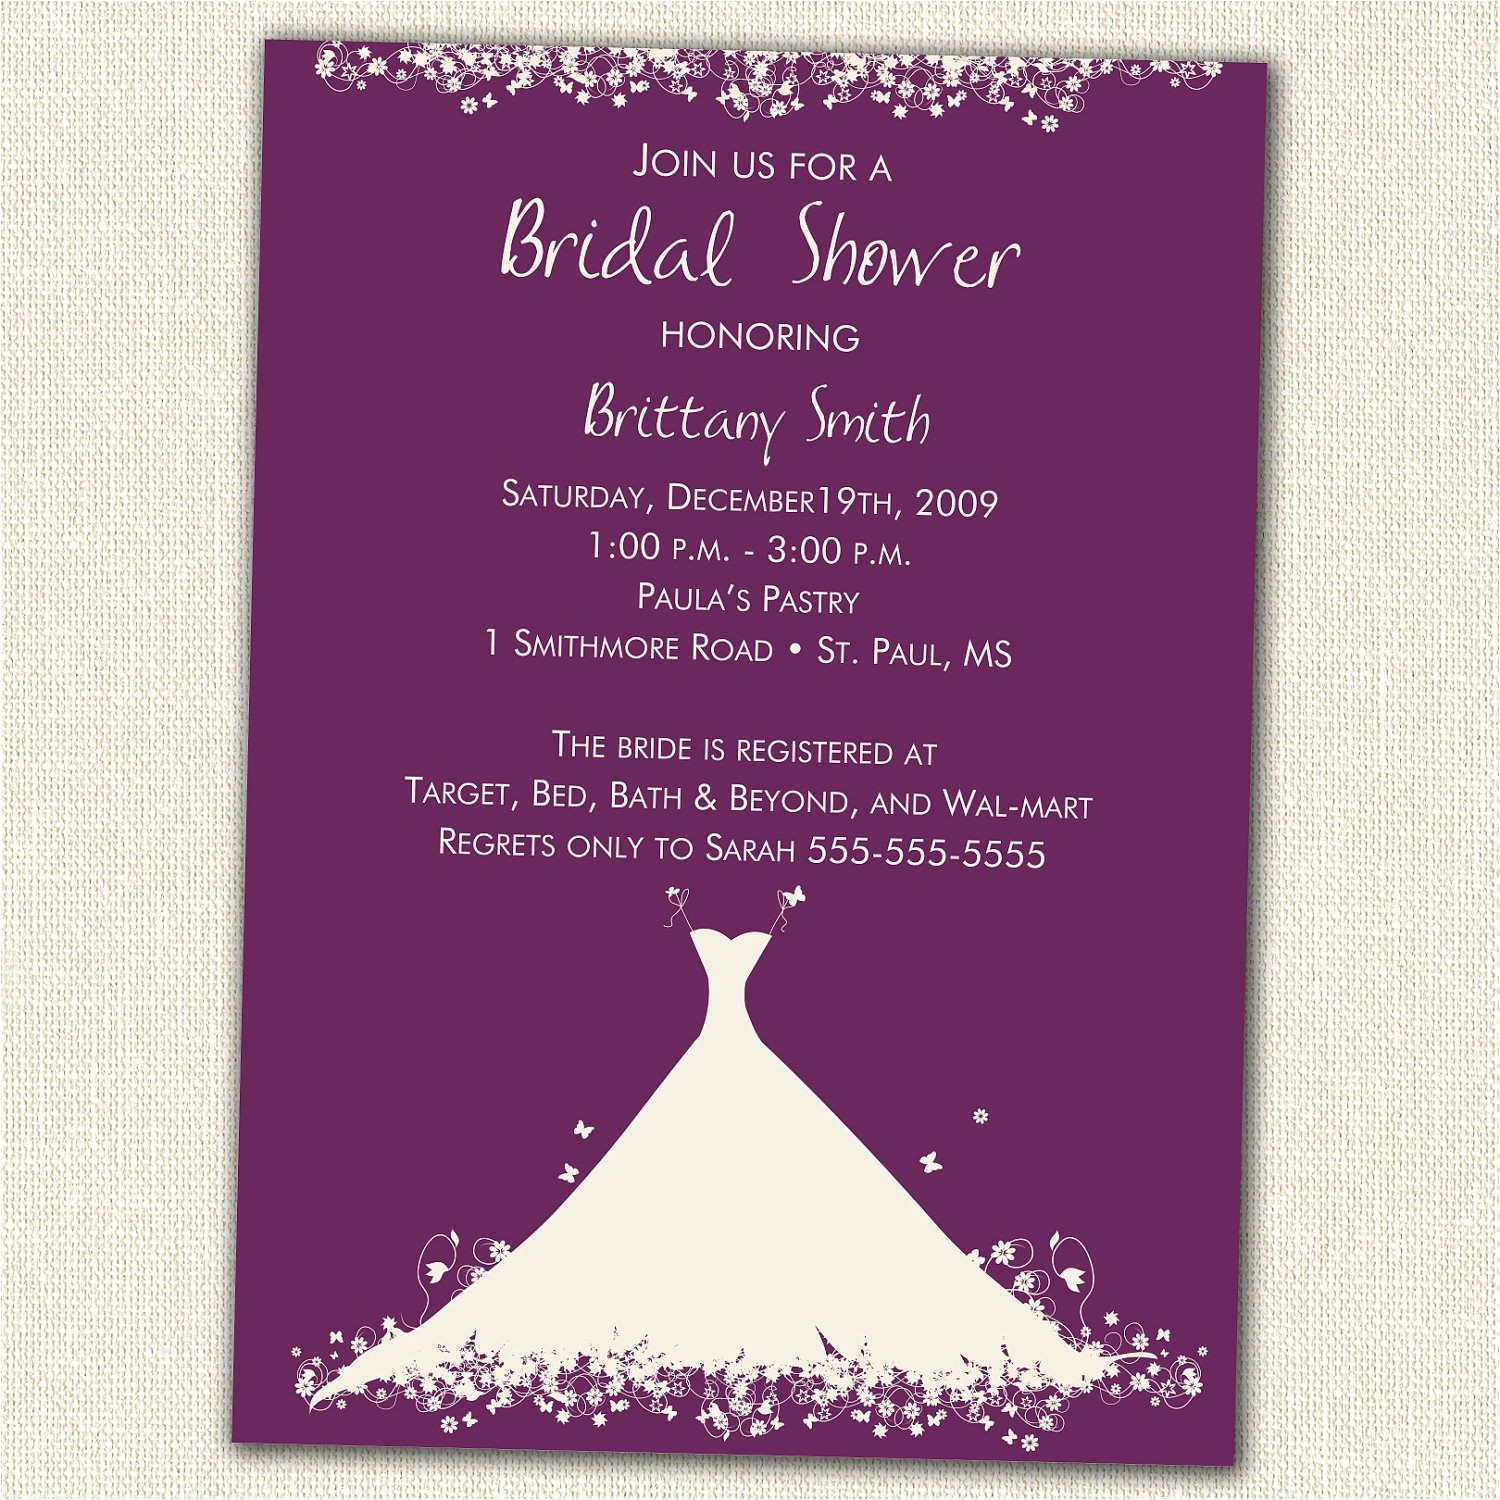 Vistaprint Canada Bridal Shower Invitations Vista Print Wedding Shower Invitations Arts Arts